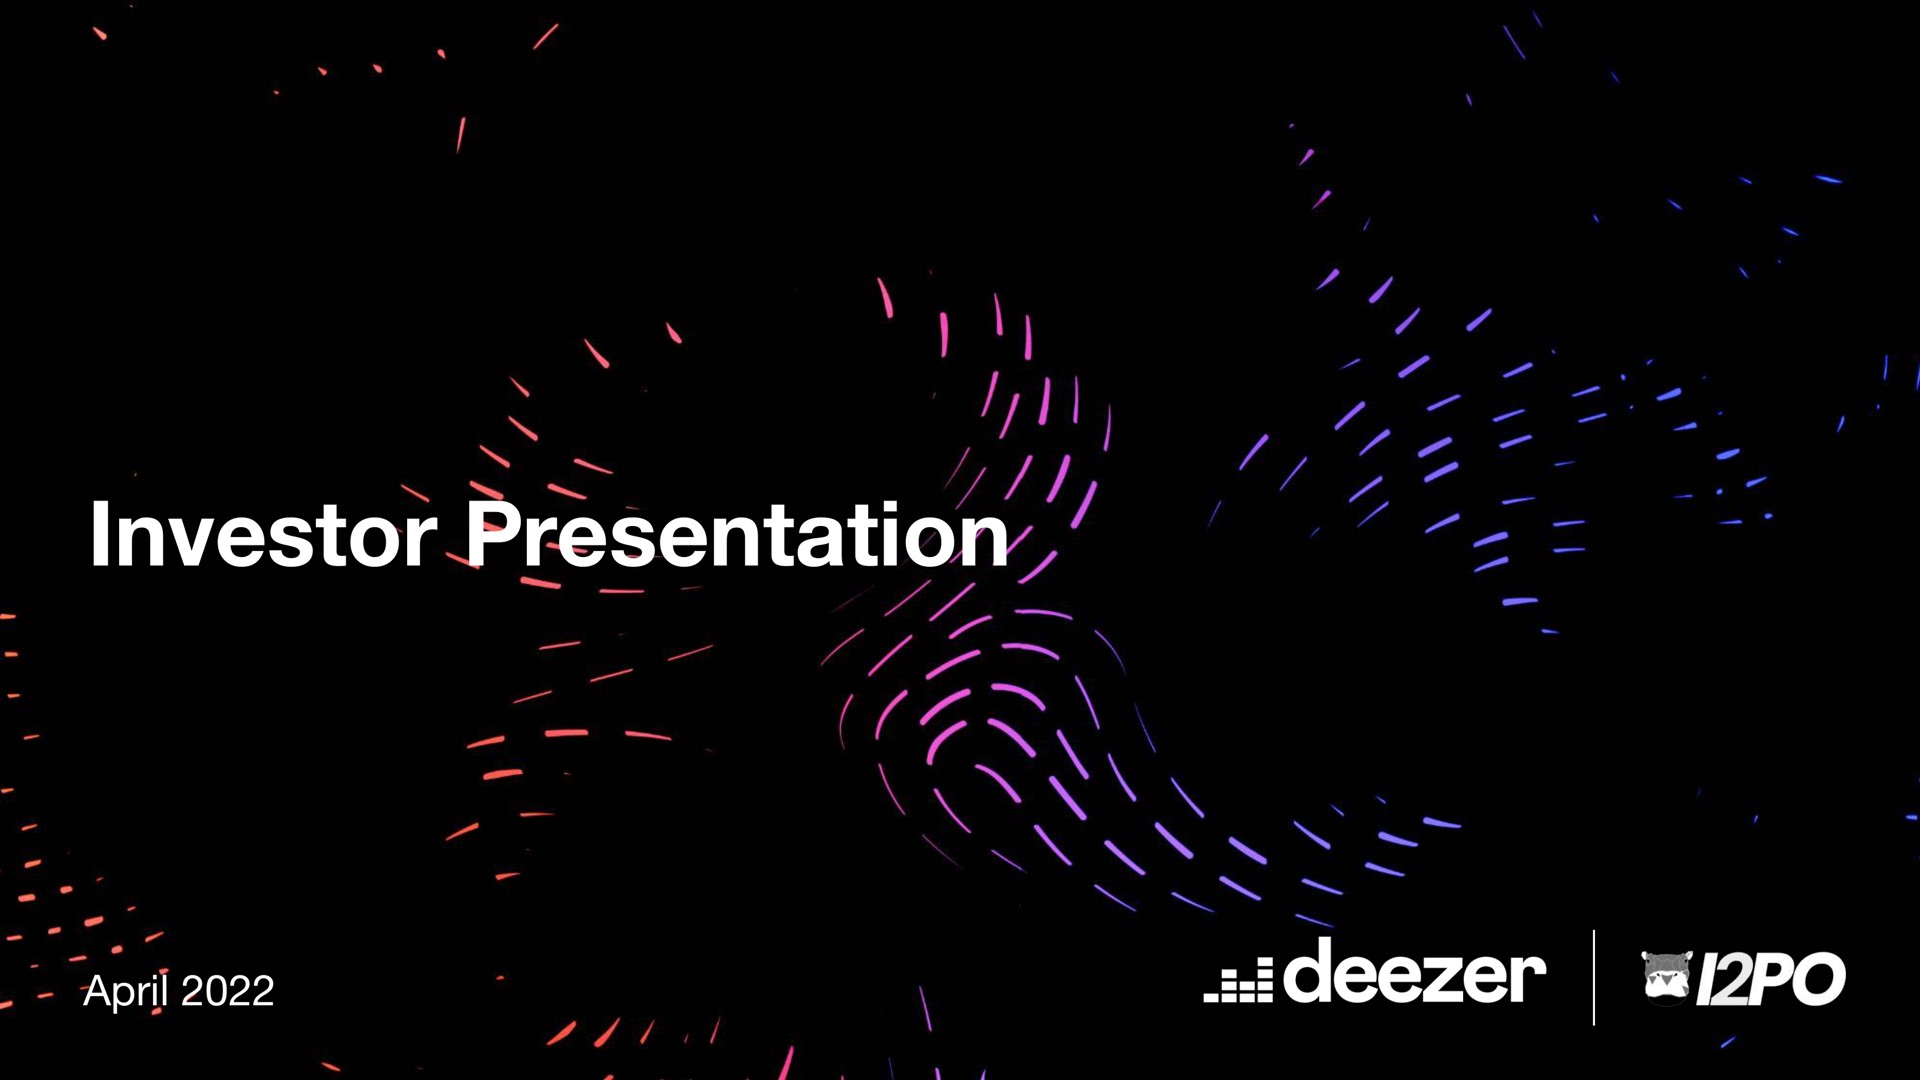 copyright global brand studio brand investor presentation | Deezer